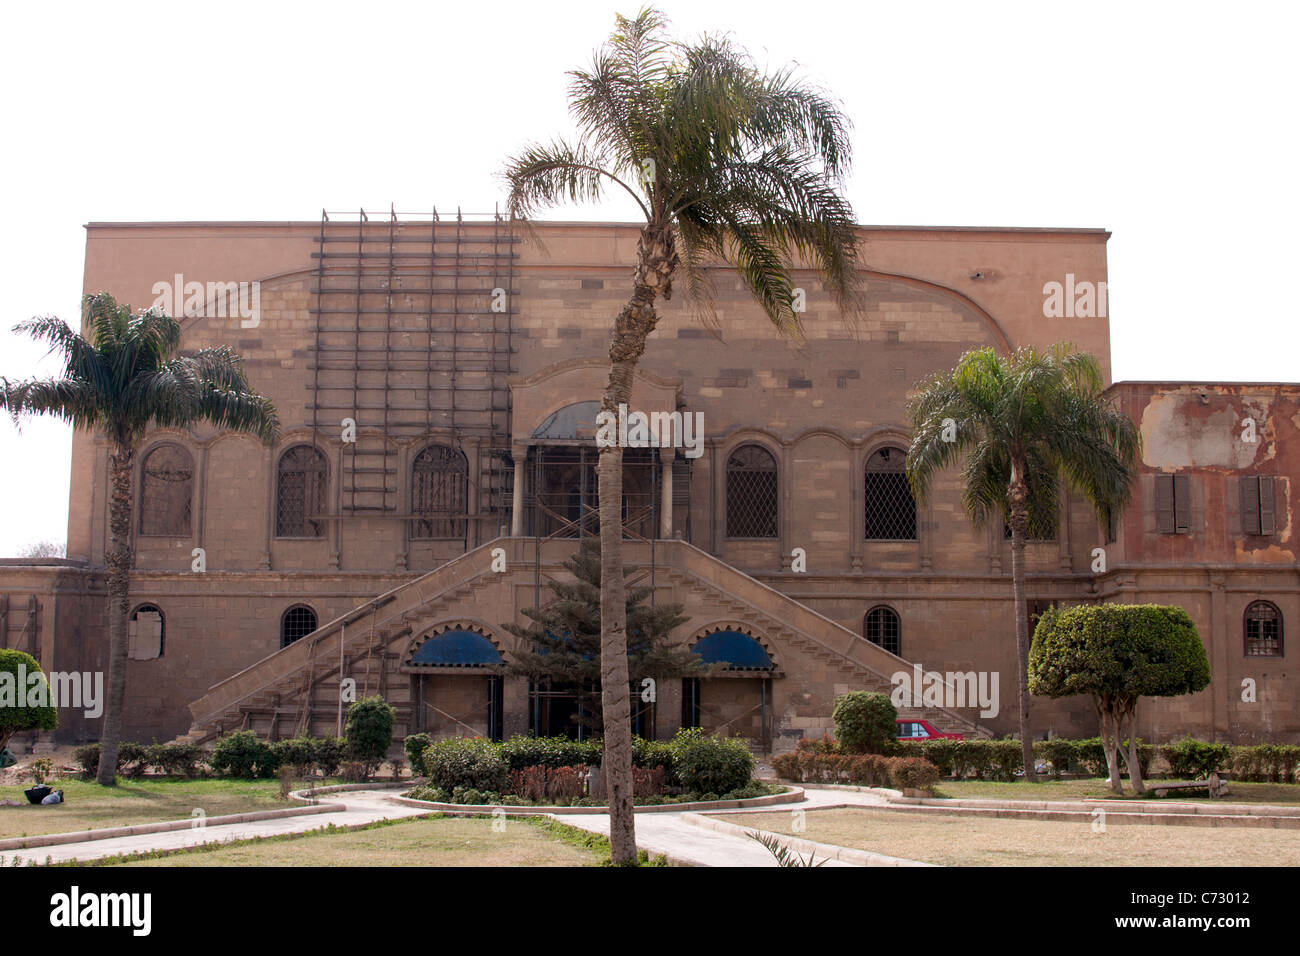 A museum inside Saladin Citadel. The Saladin Citadel is built on the Mokattam hill near the center of Cairo. Stock Photo